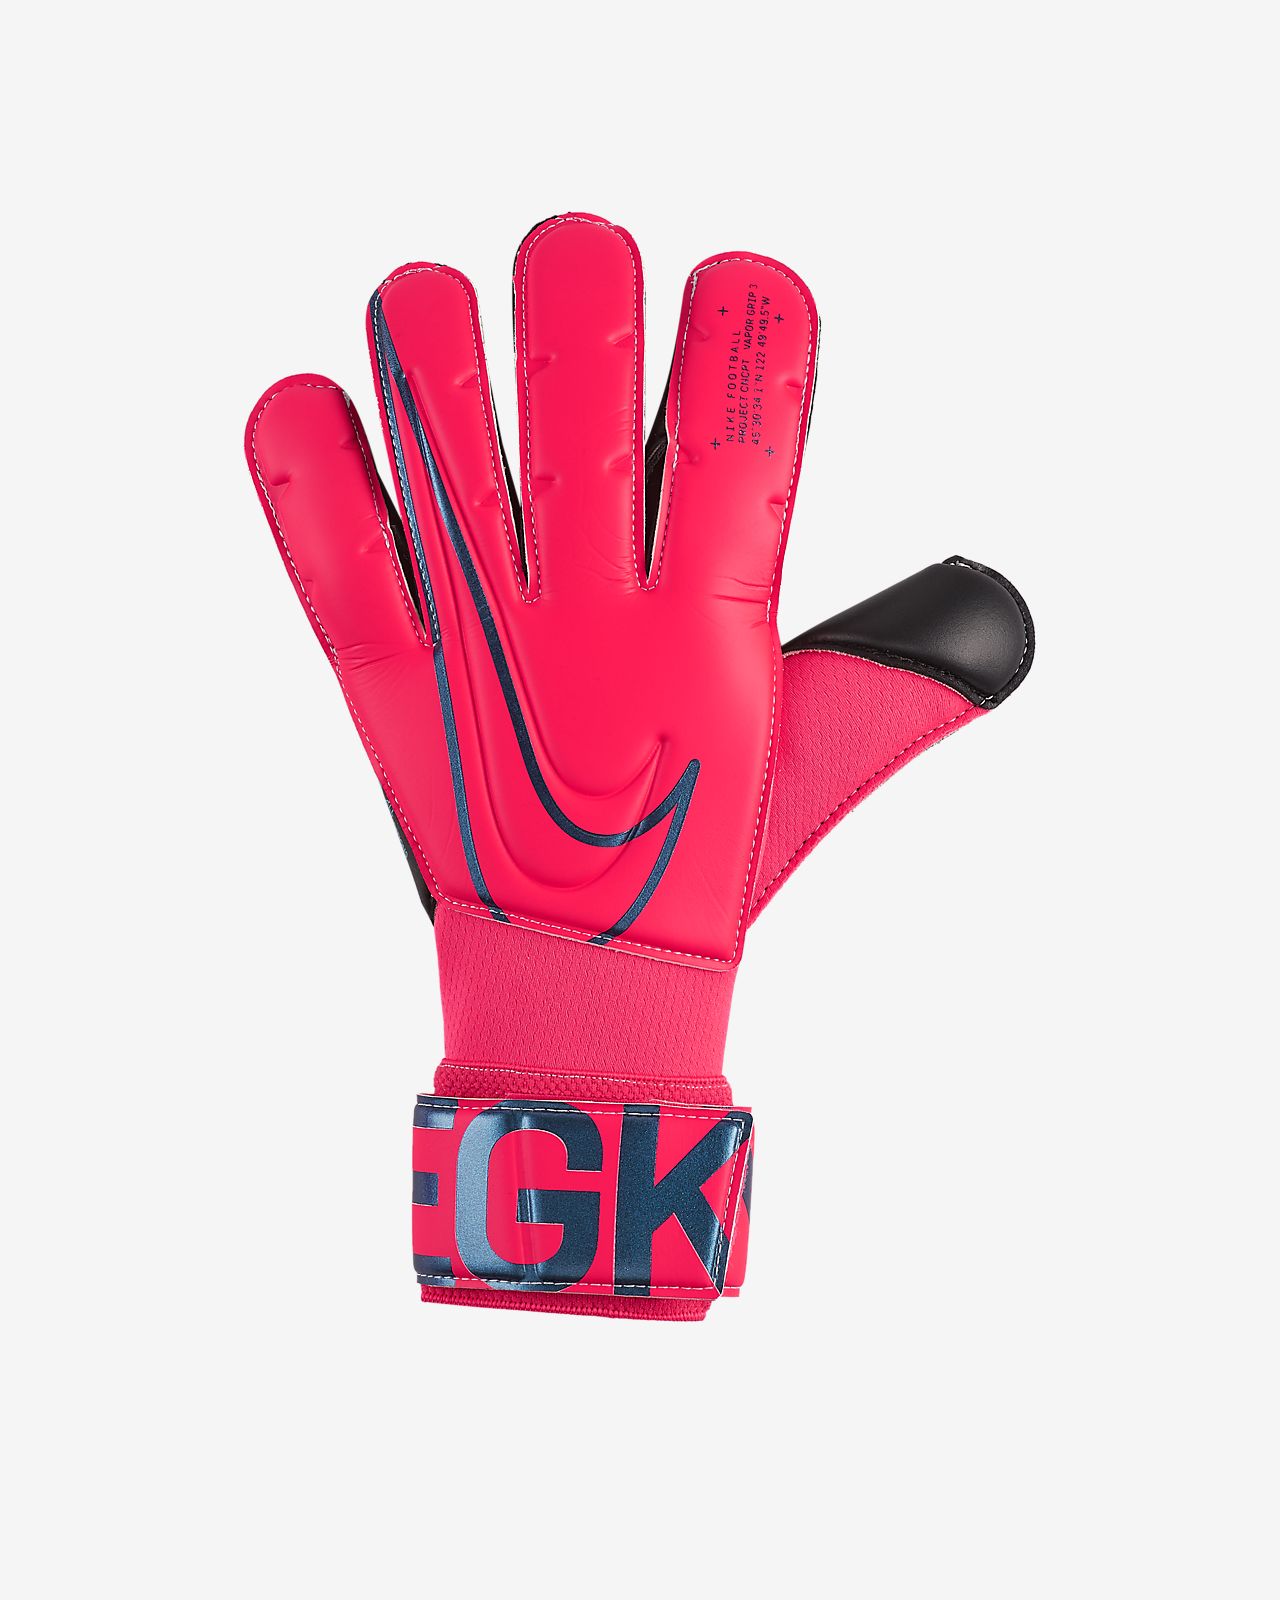 nike vapor 36 fielding glove for sale